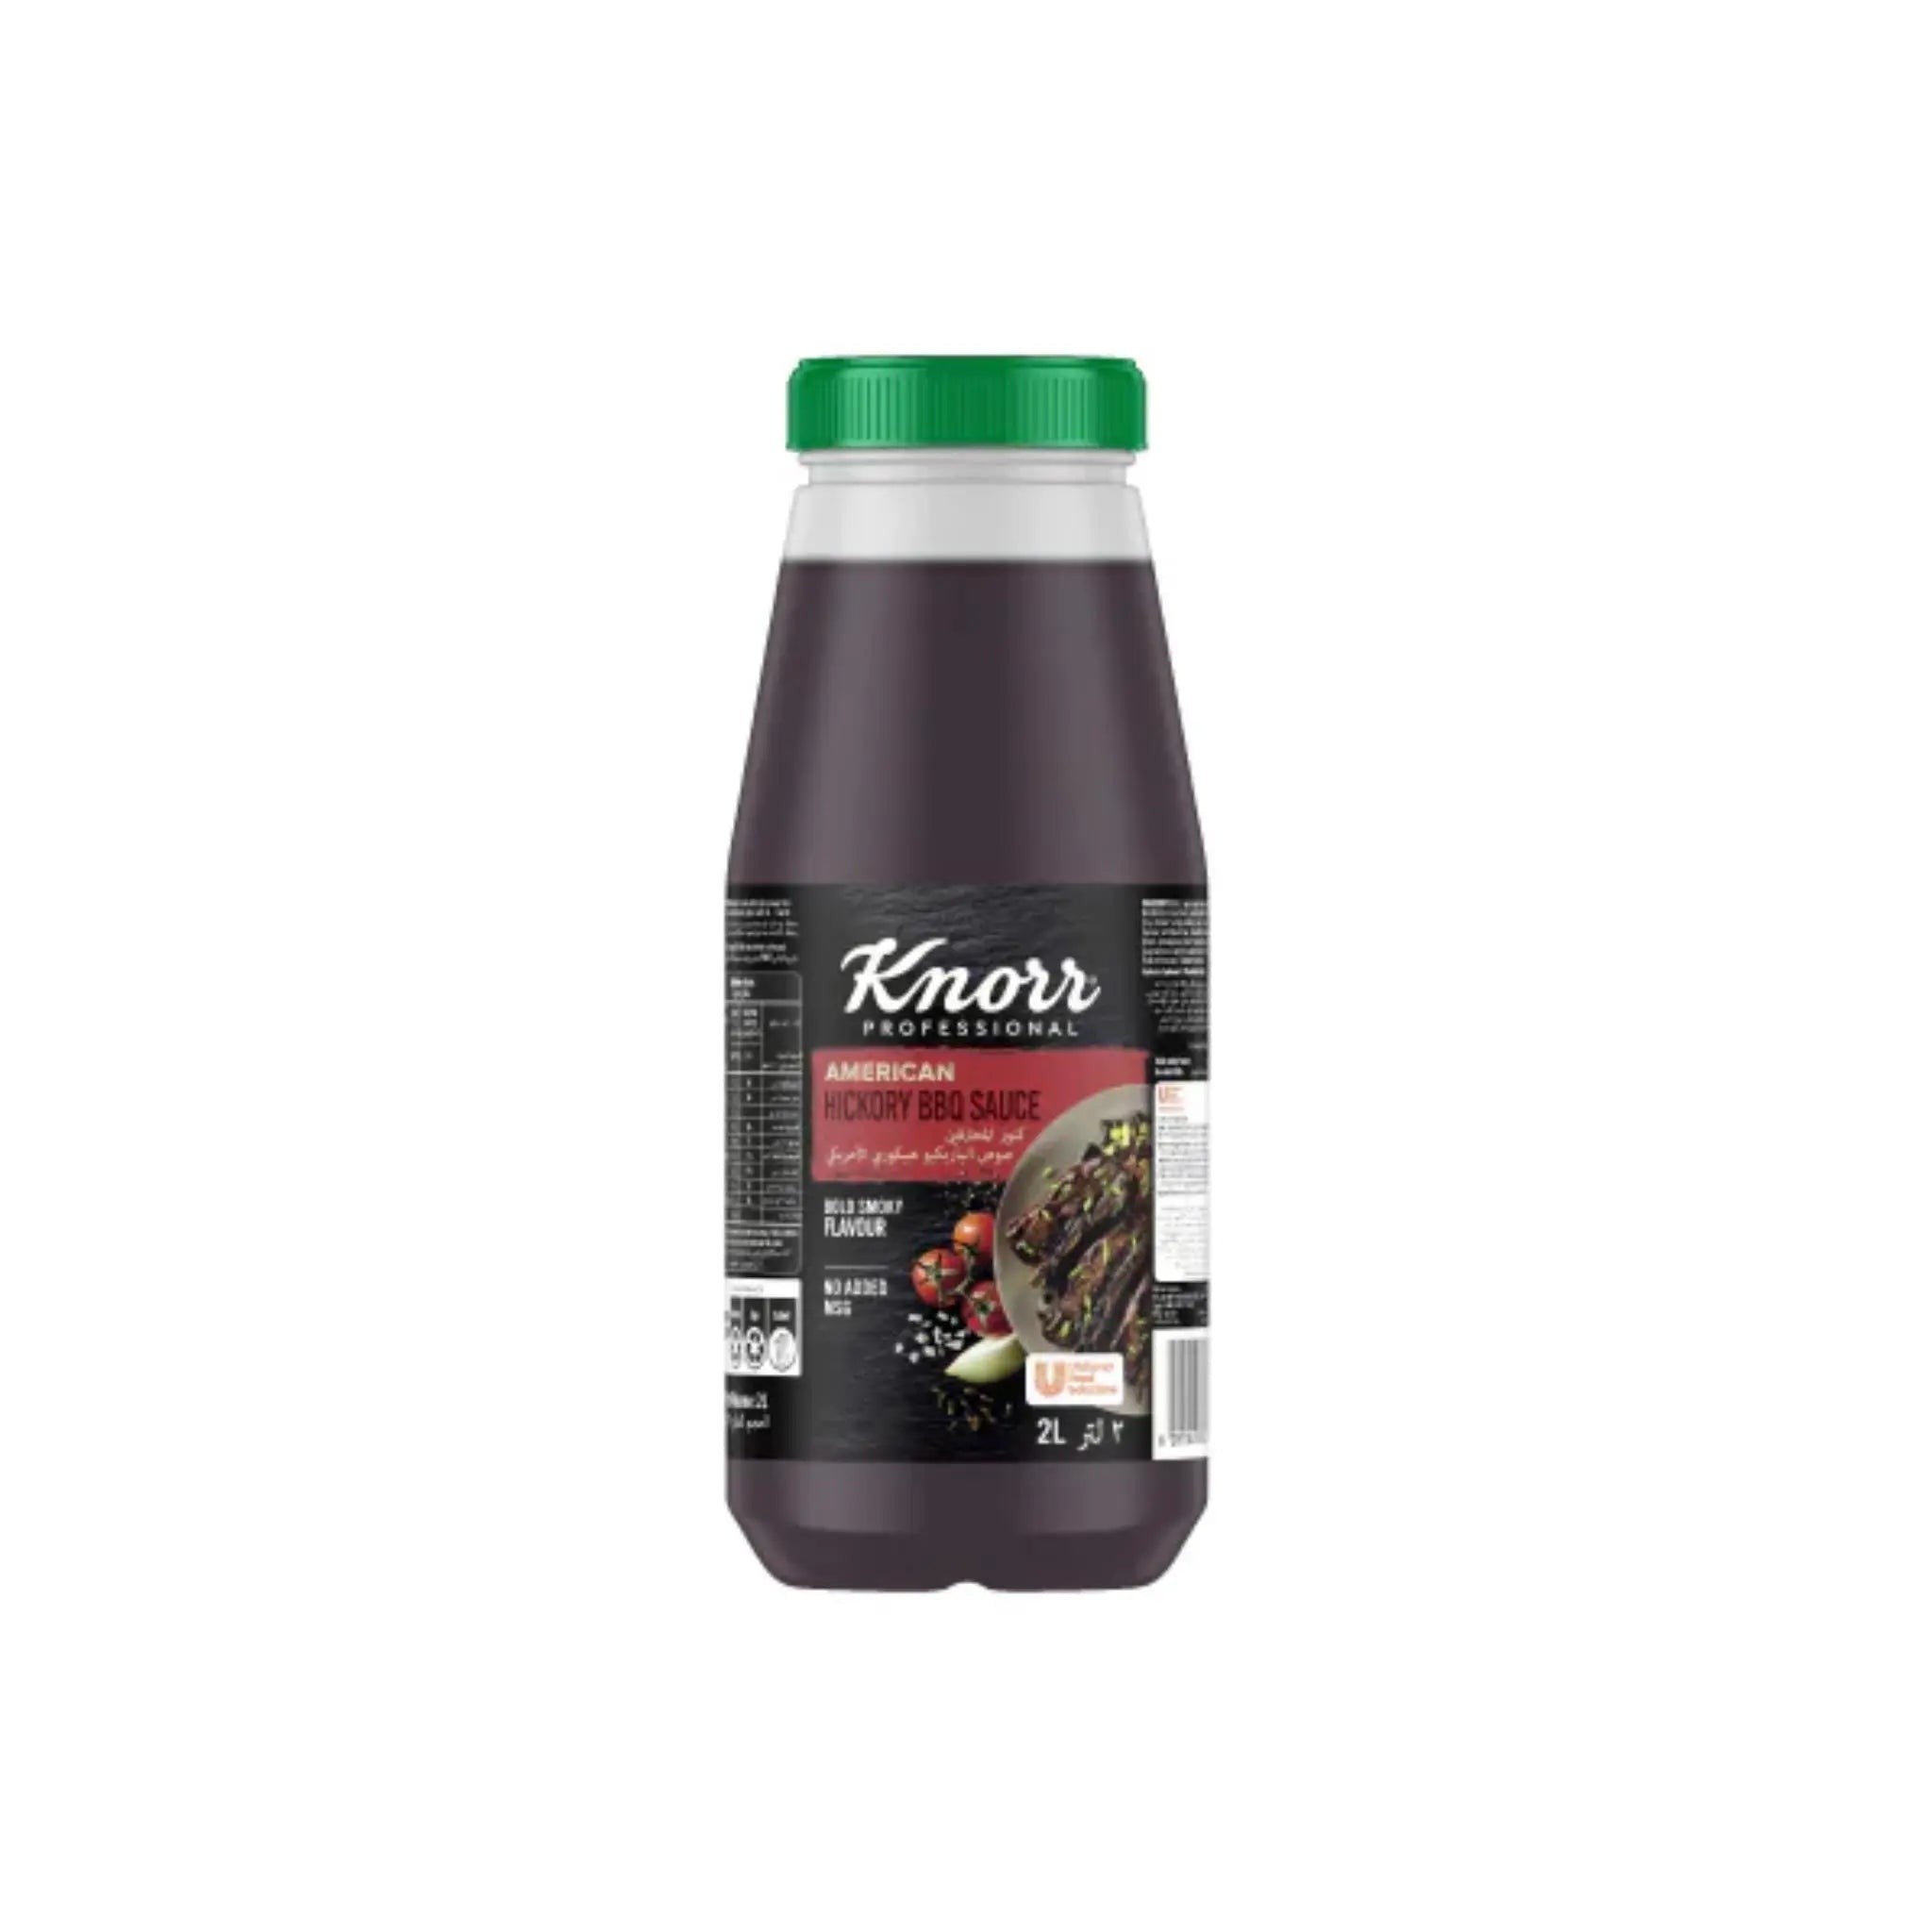 Knorr Professional Hickory BBQ Sauce - 6x2L (1 carton) - Marino.AE